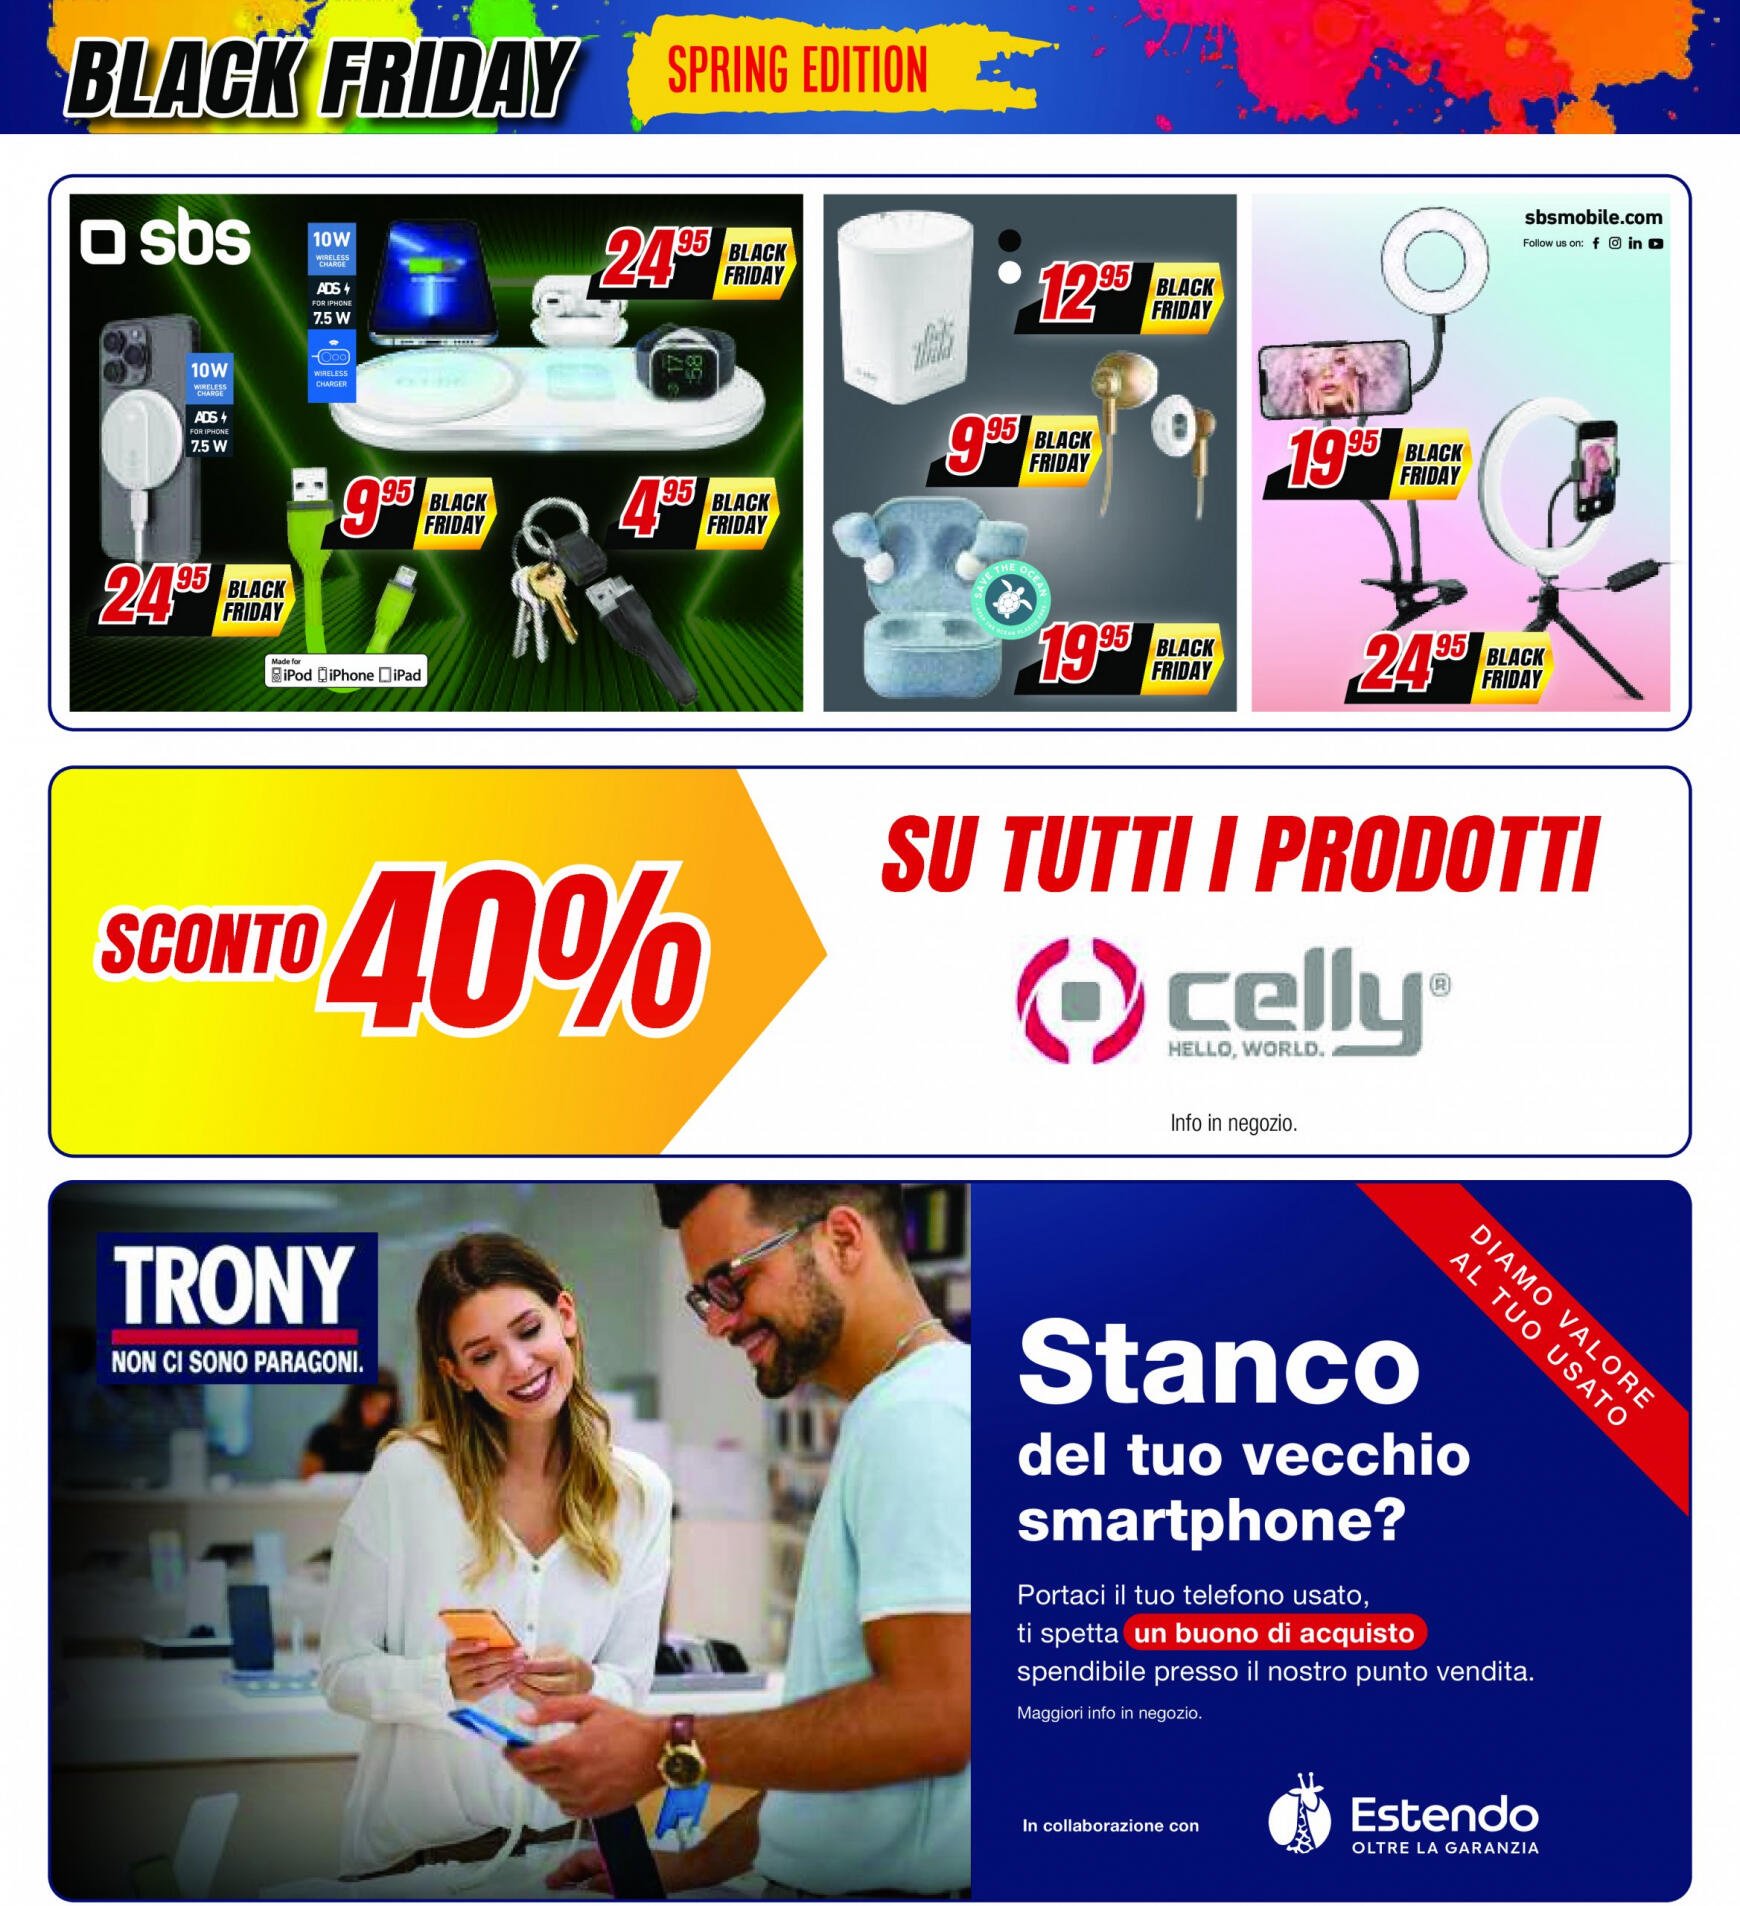 trony - Nuovo volantino Trony 12.04. - 01.05. - page: 7